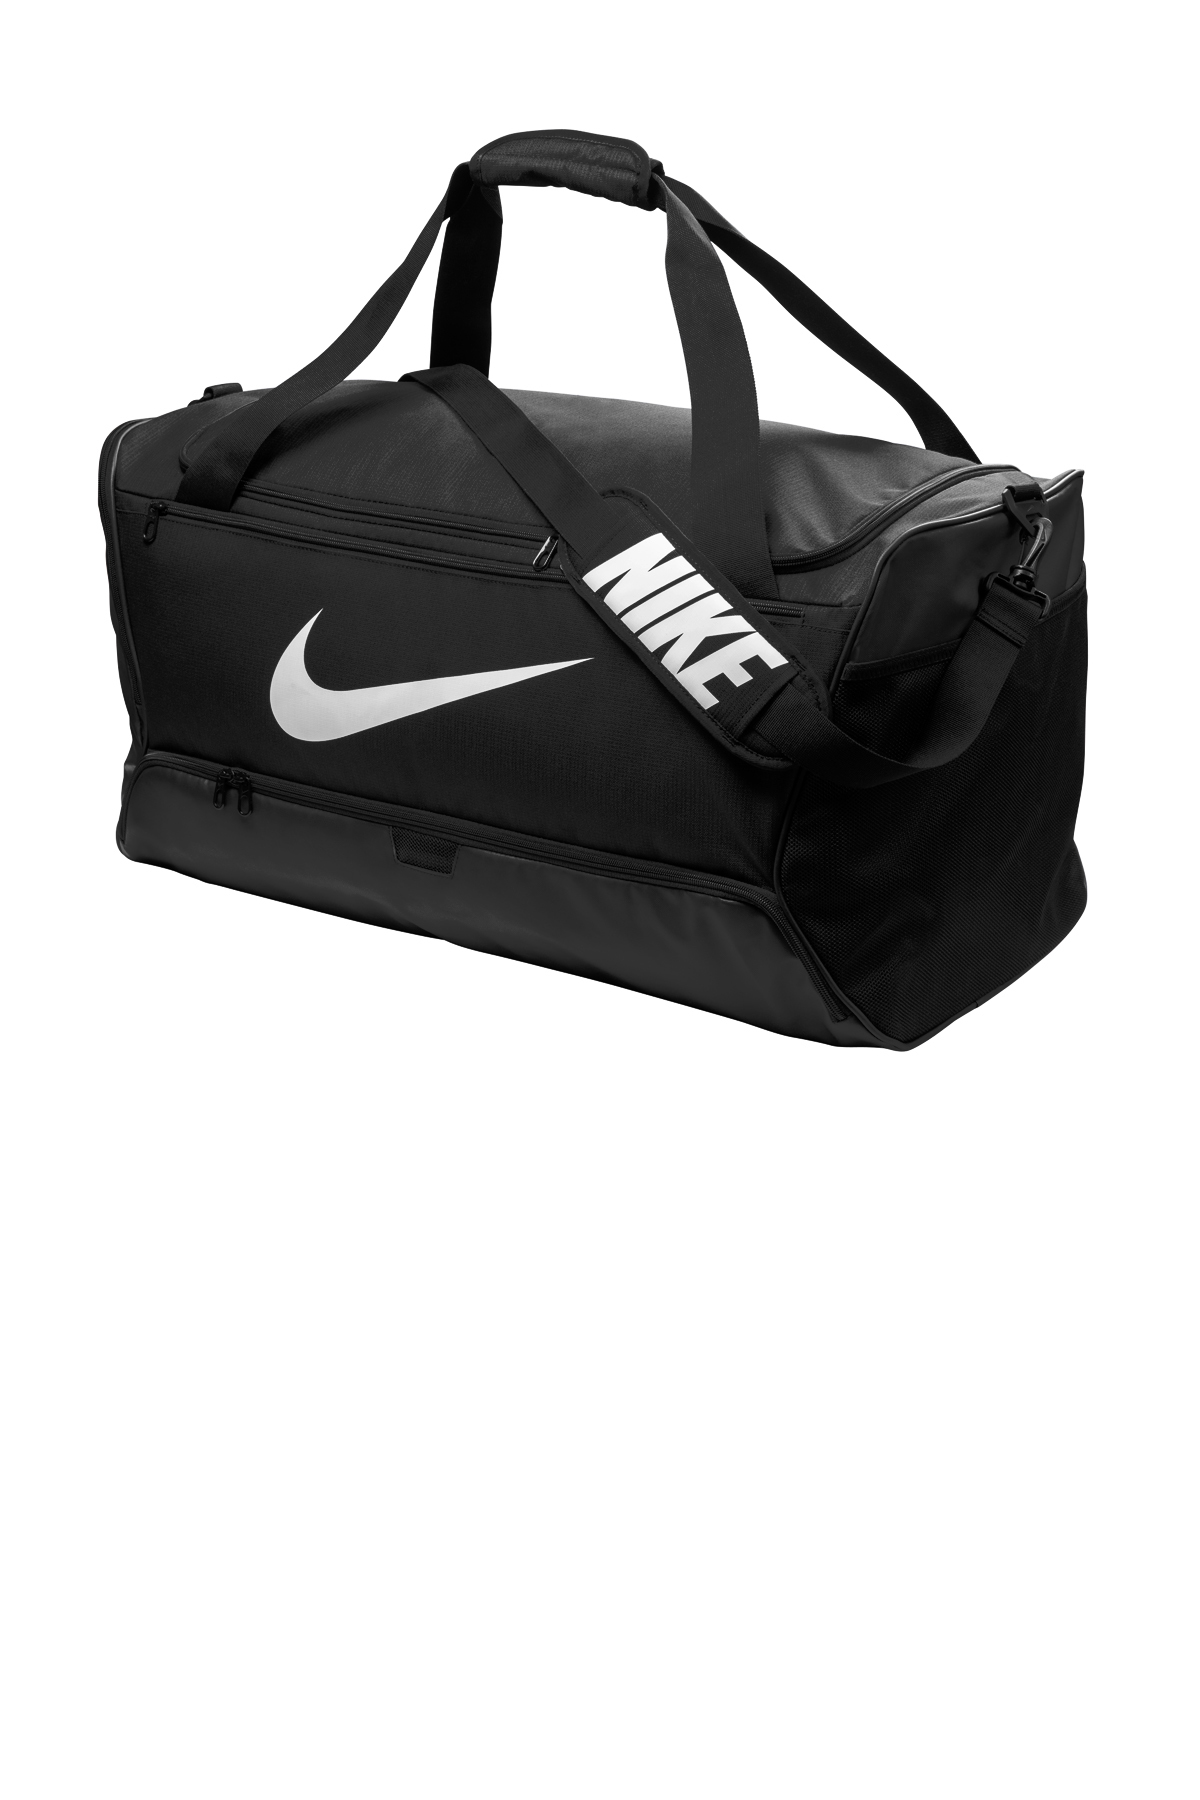 Nike Brasilia Large Duffel | Product | SanMar